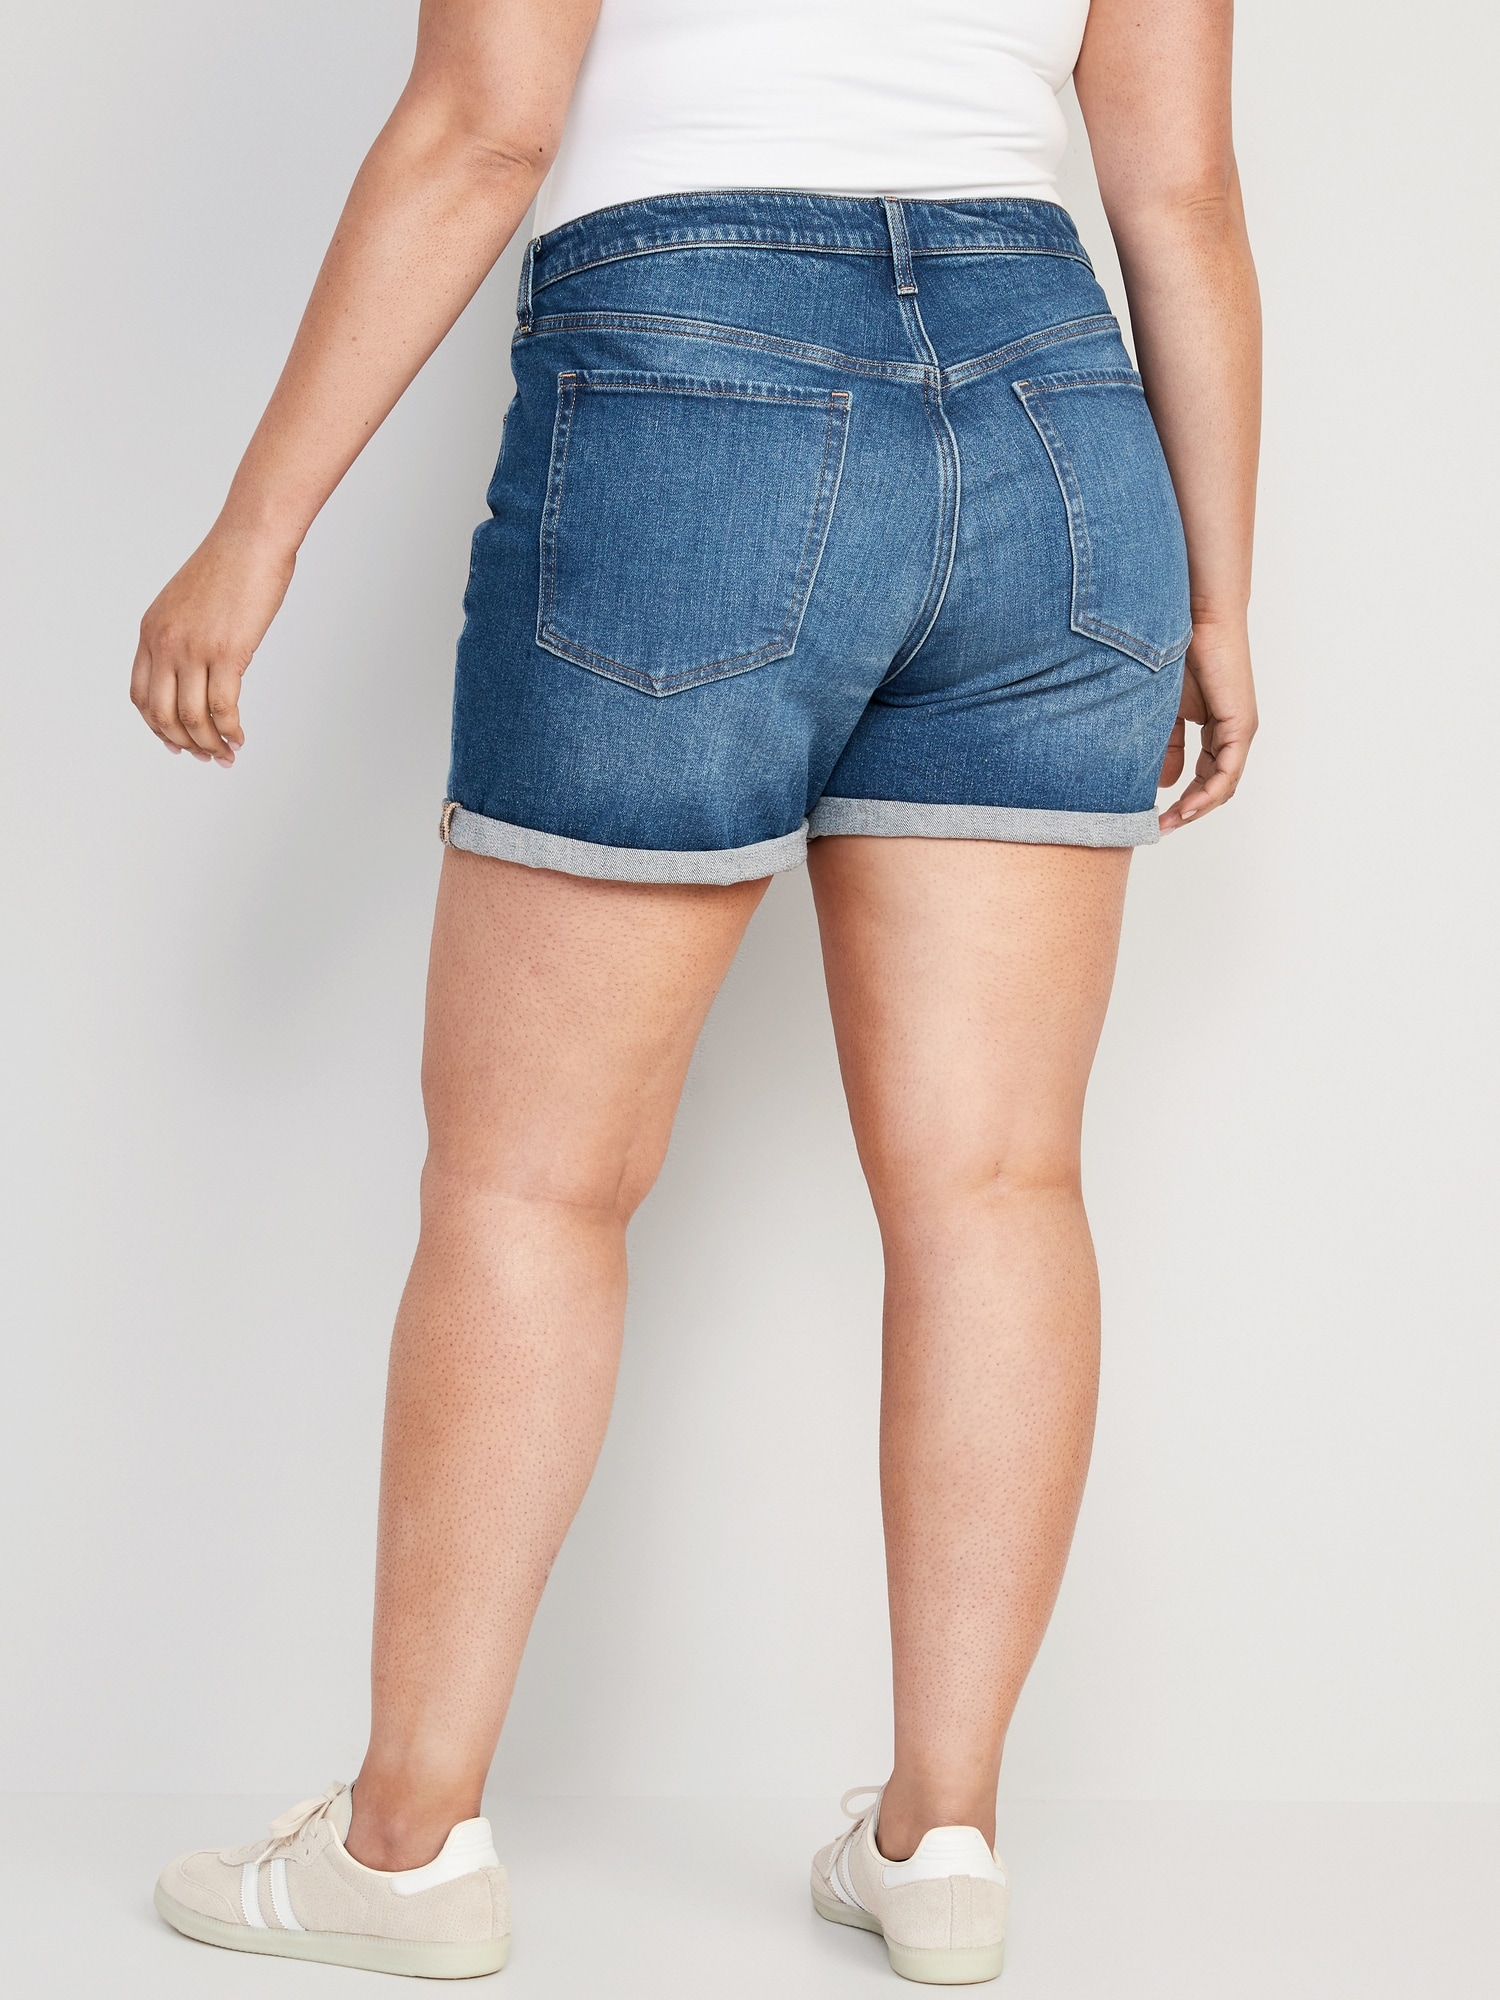 HDE Junior's Womens Mid Rise Stretchy Denim Jean Shorts (Blue, Small) -  Walmart.com